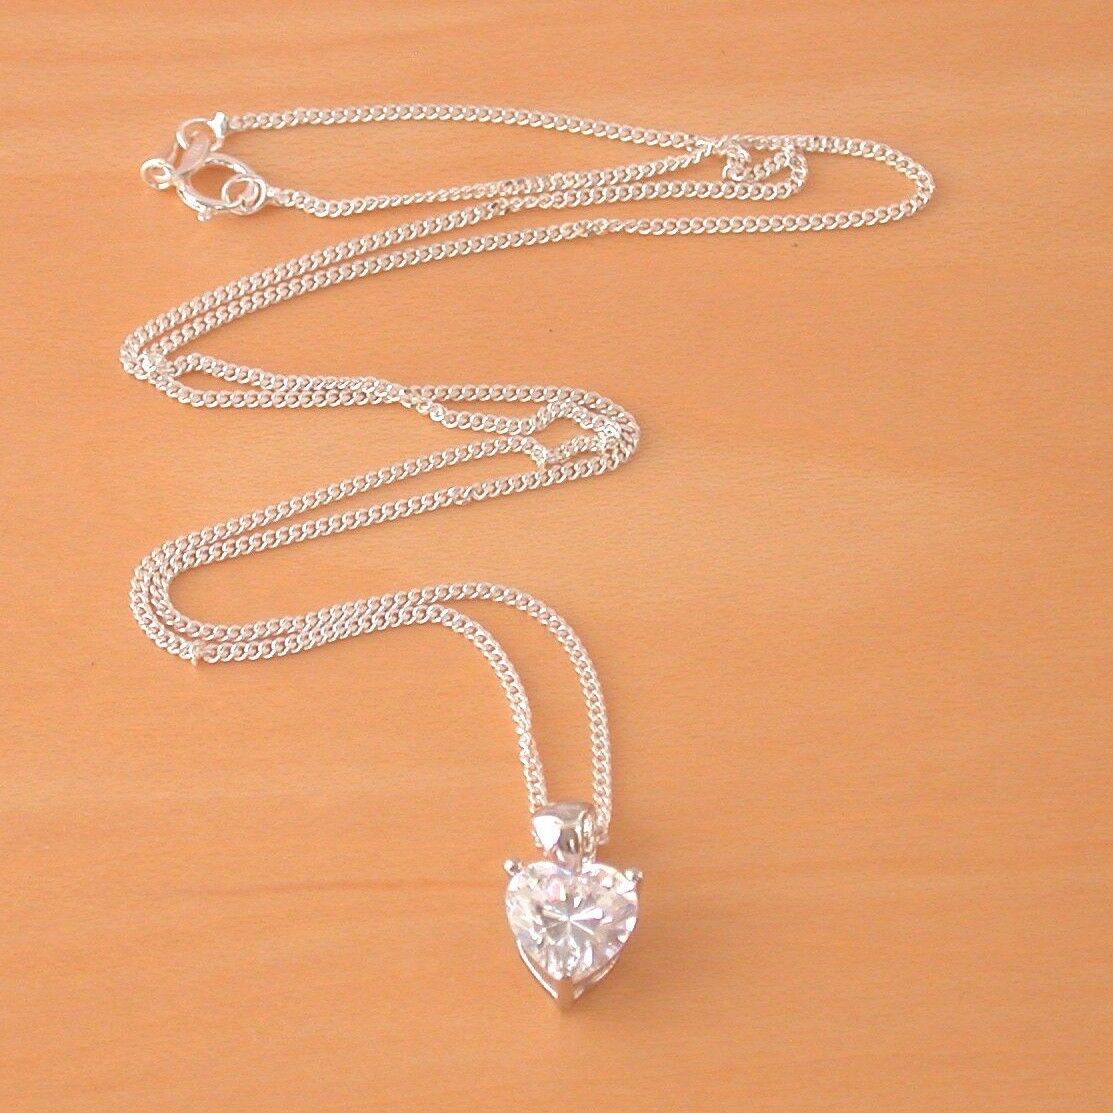 cz heart necklace uk